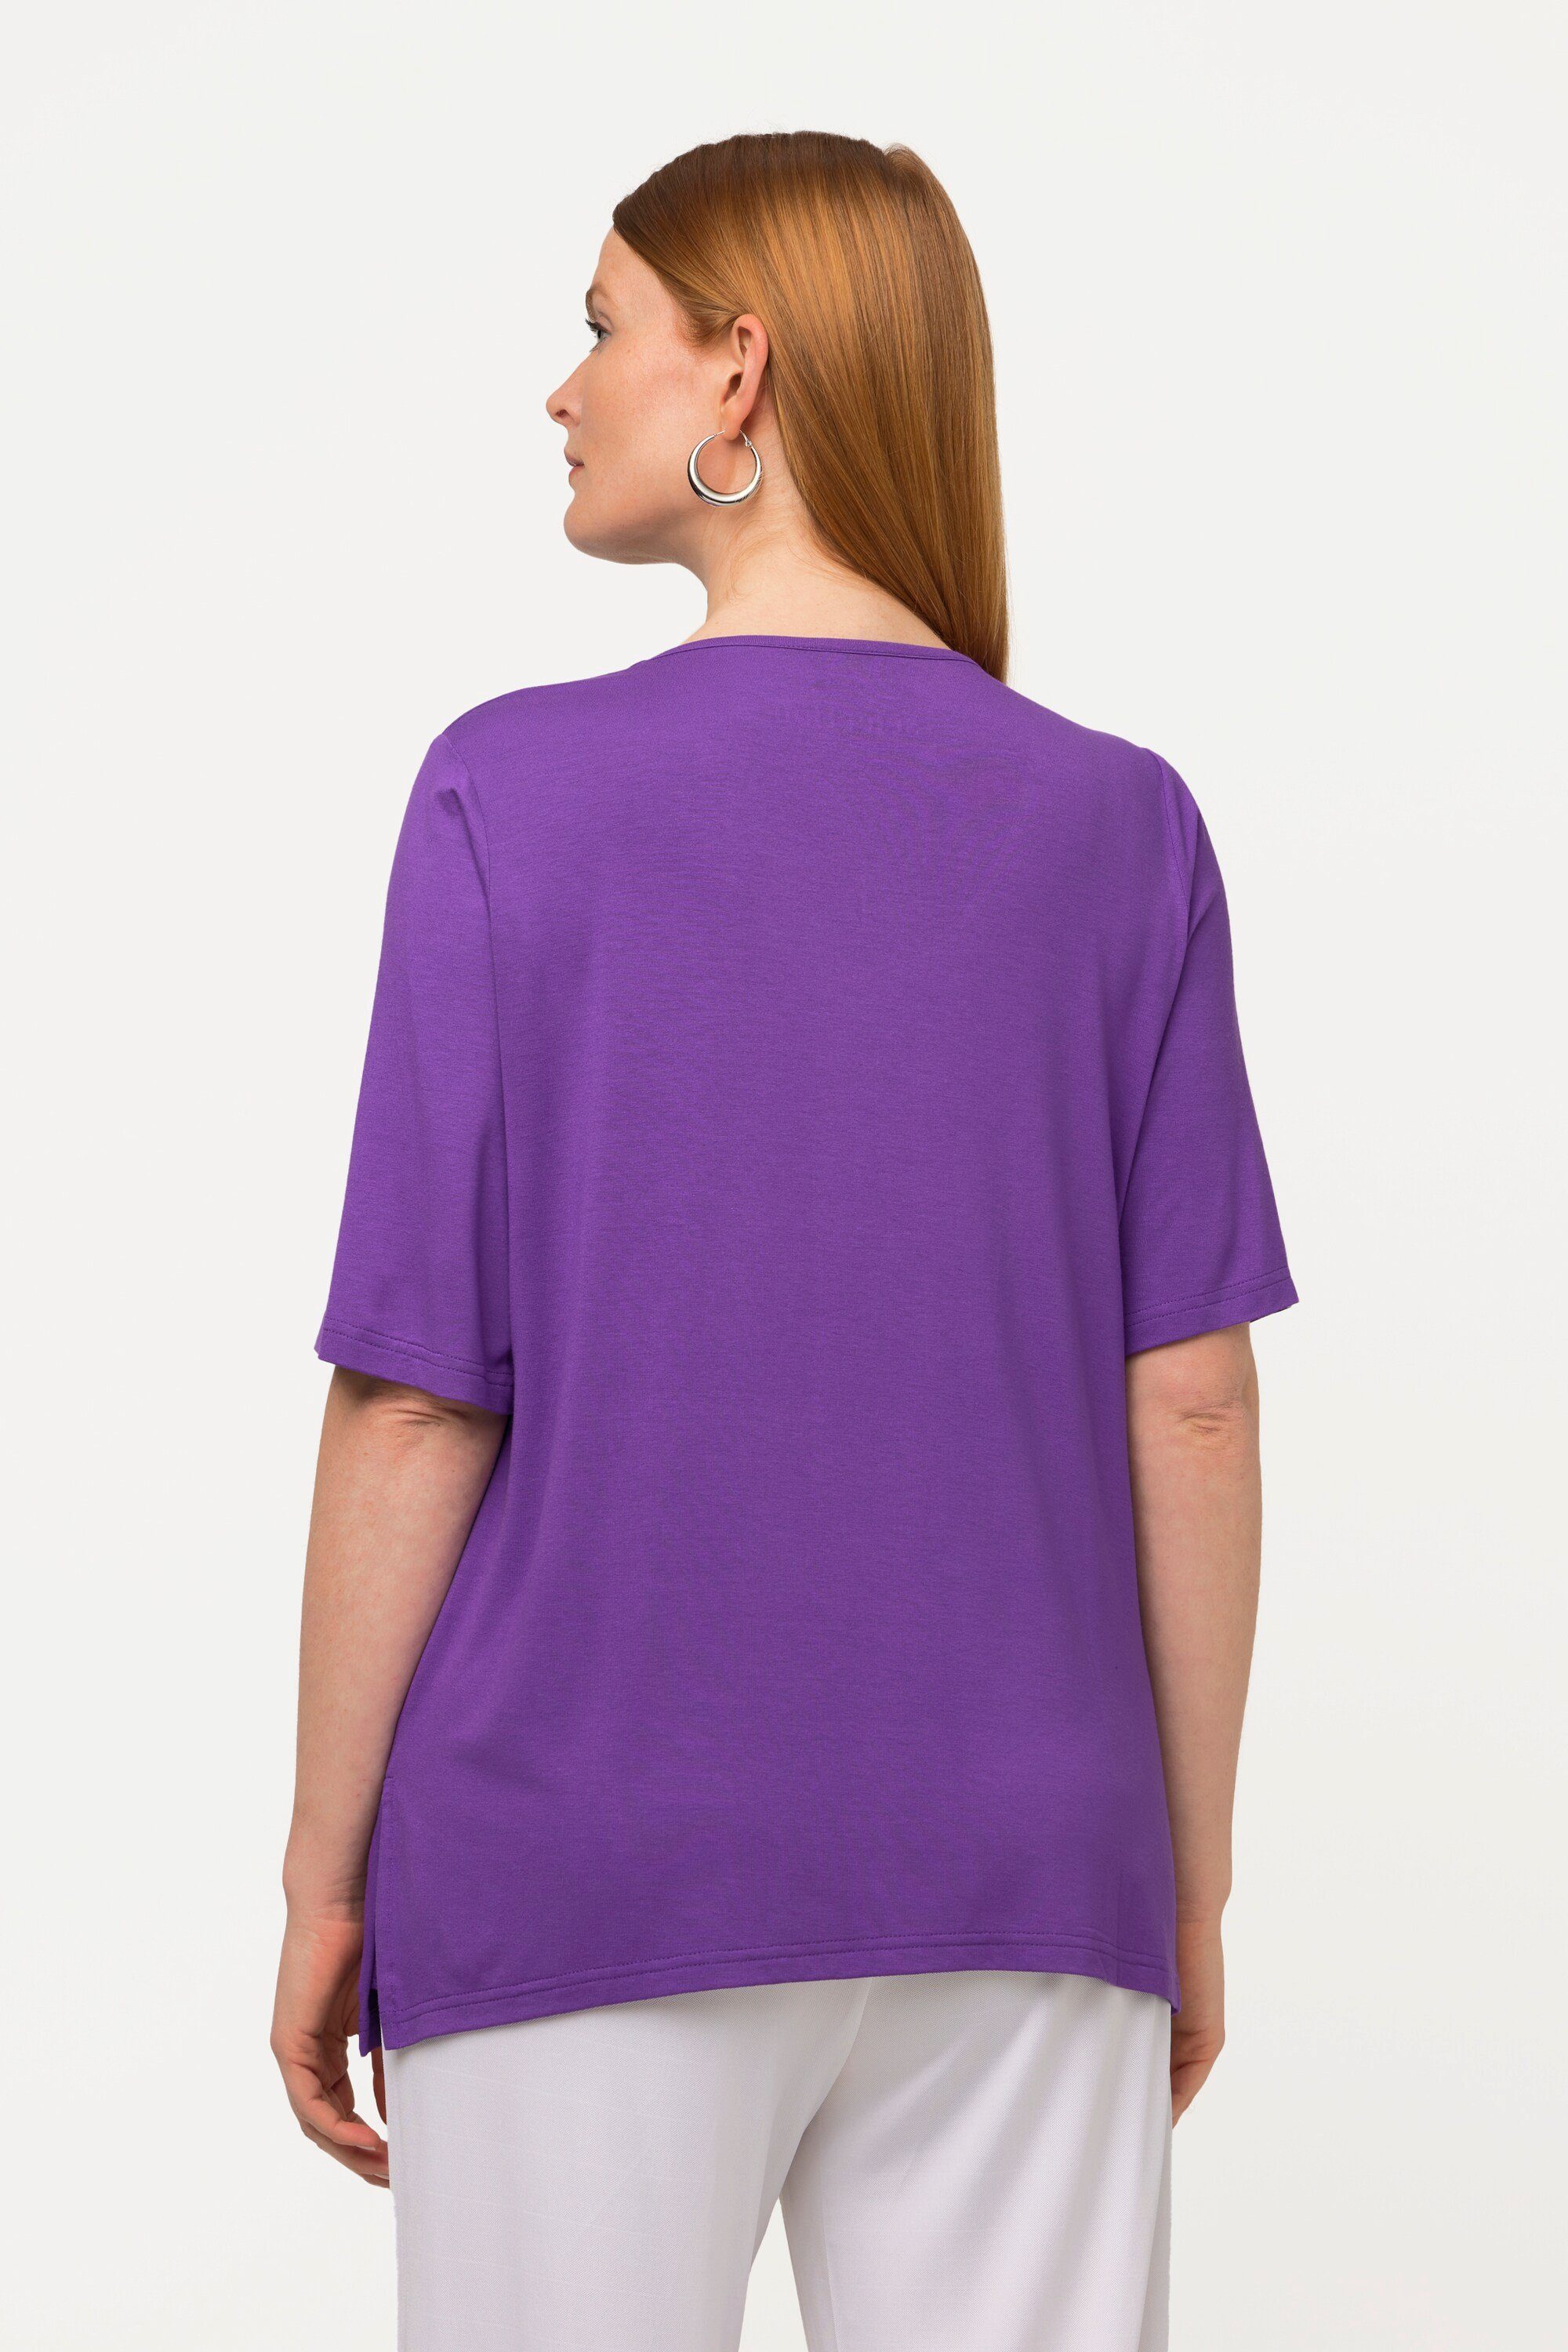 Popken Halbarm violett Rundhalsshirt V-Ausschnitt T-Shirt doppellagig Ulla vorne